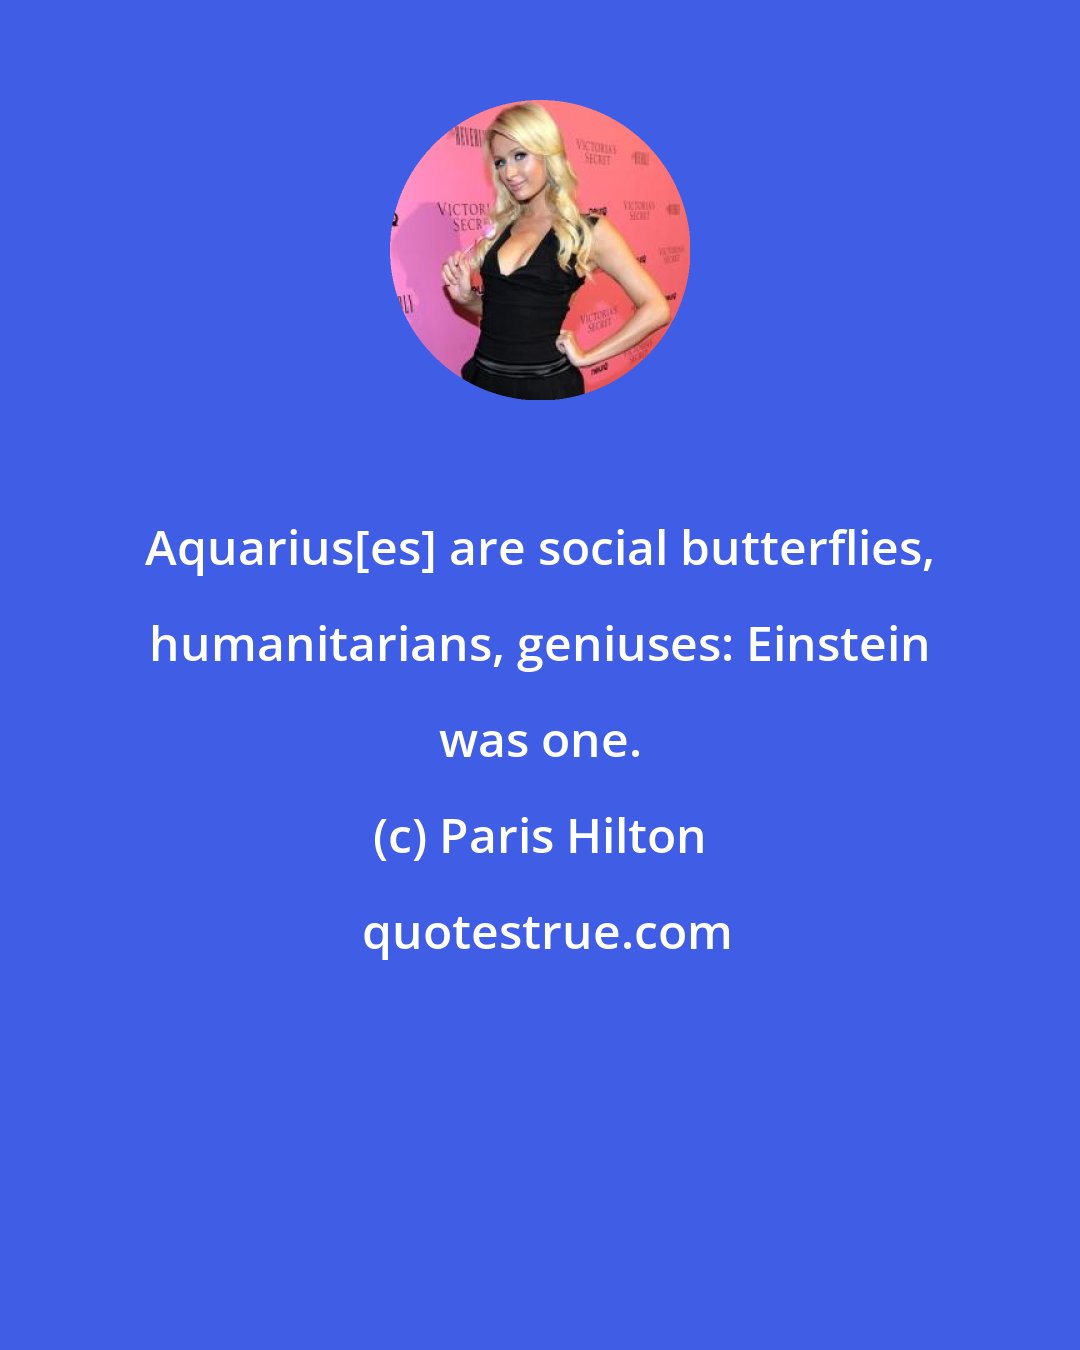 Paris Hilton: Aquarius[es] are social butterflies, humanitarians, geniuses: Einstein was one.